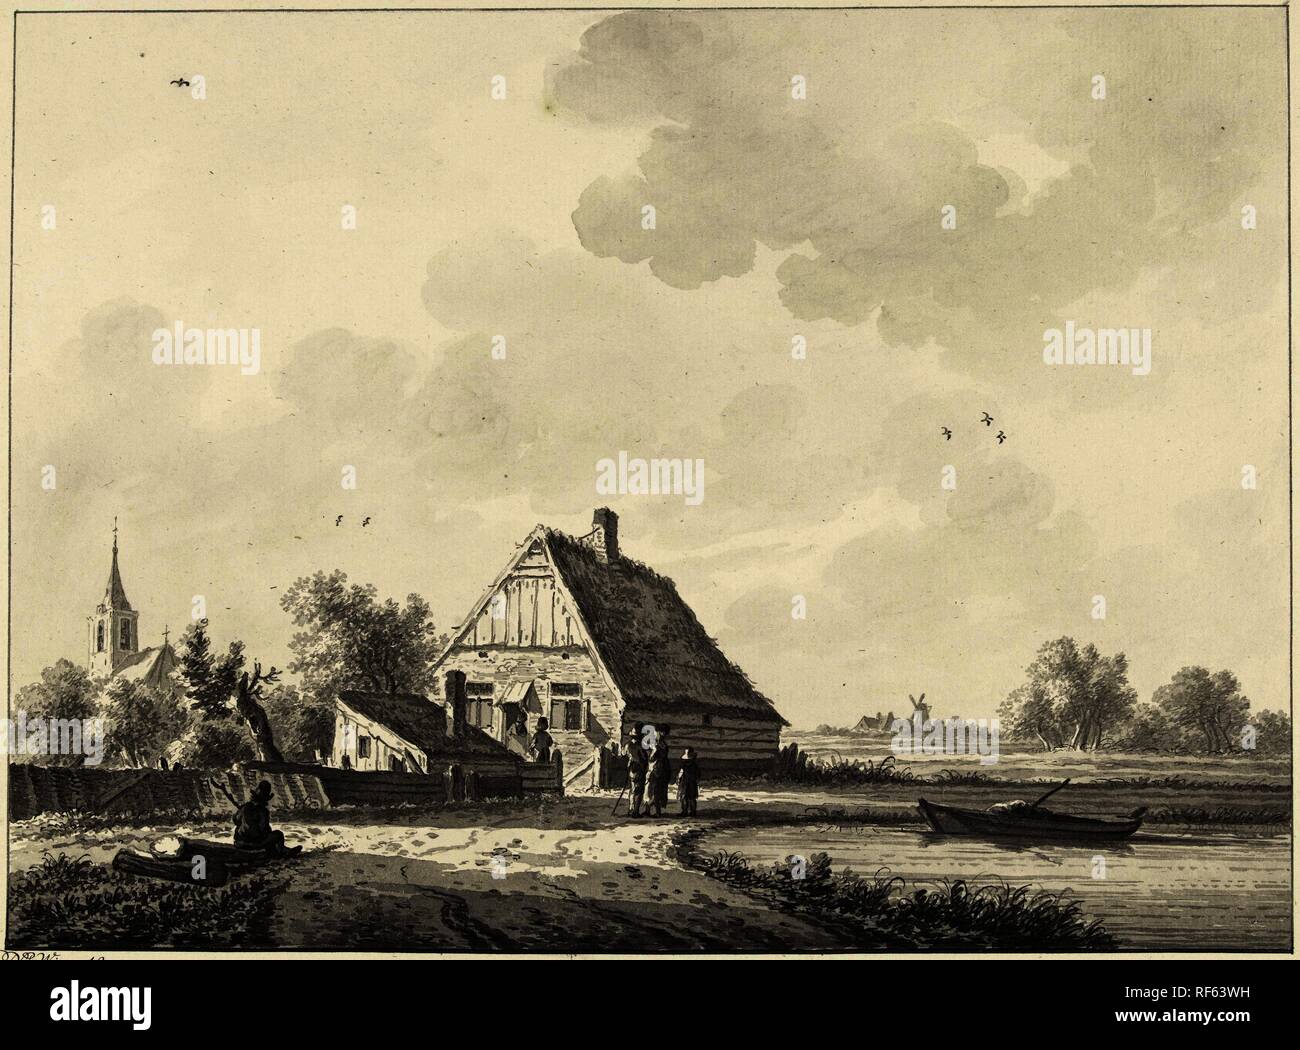 The village Drumpt in Gelderland. Draughtsman: Nicolaas Wicart. Dating: 1758 - 1815. Measurements: h 286 mm × w 408 mm; h 243 mm × w 321 mm. Museum: Rijksmuseum, Amsterdam. Stock Photo